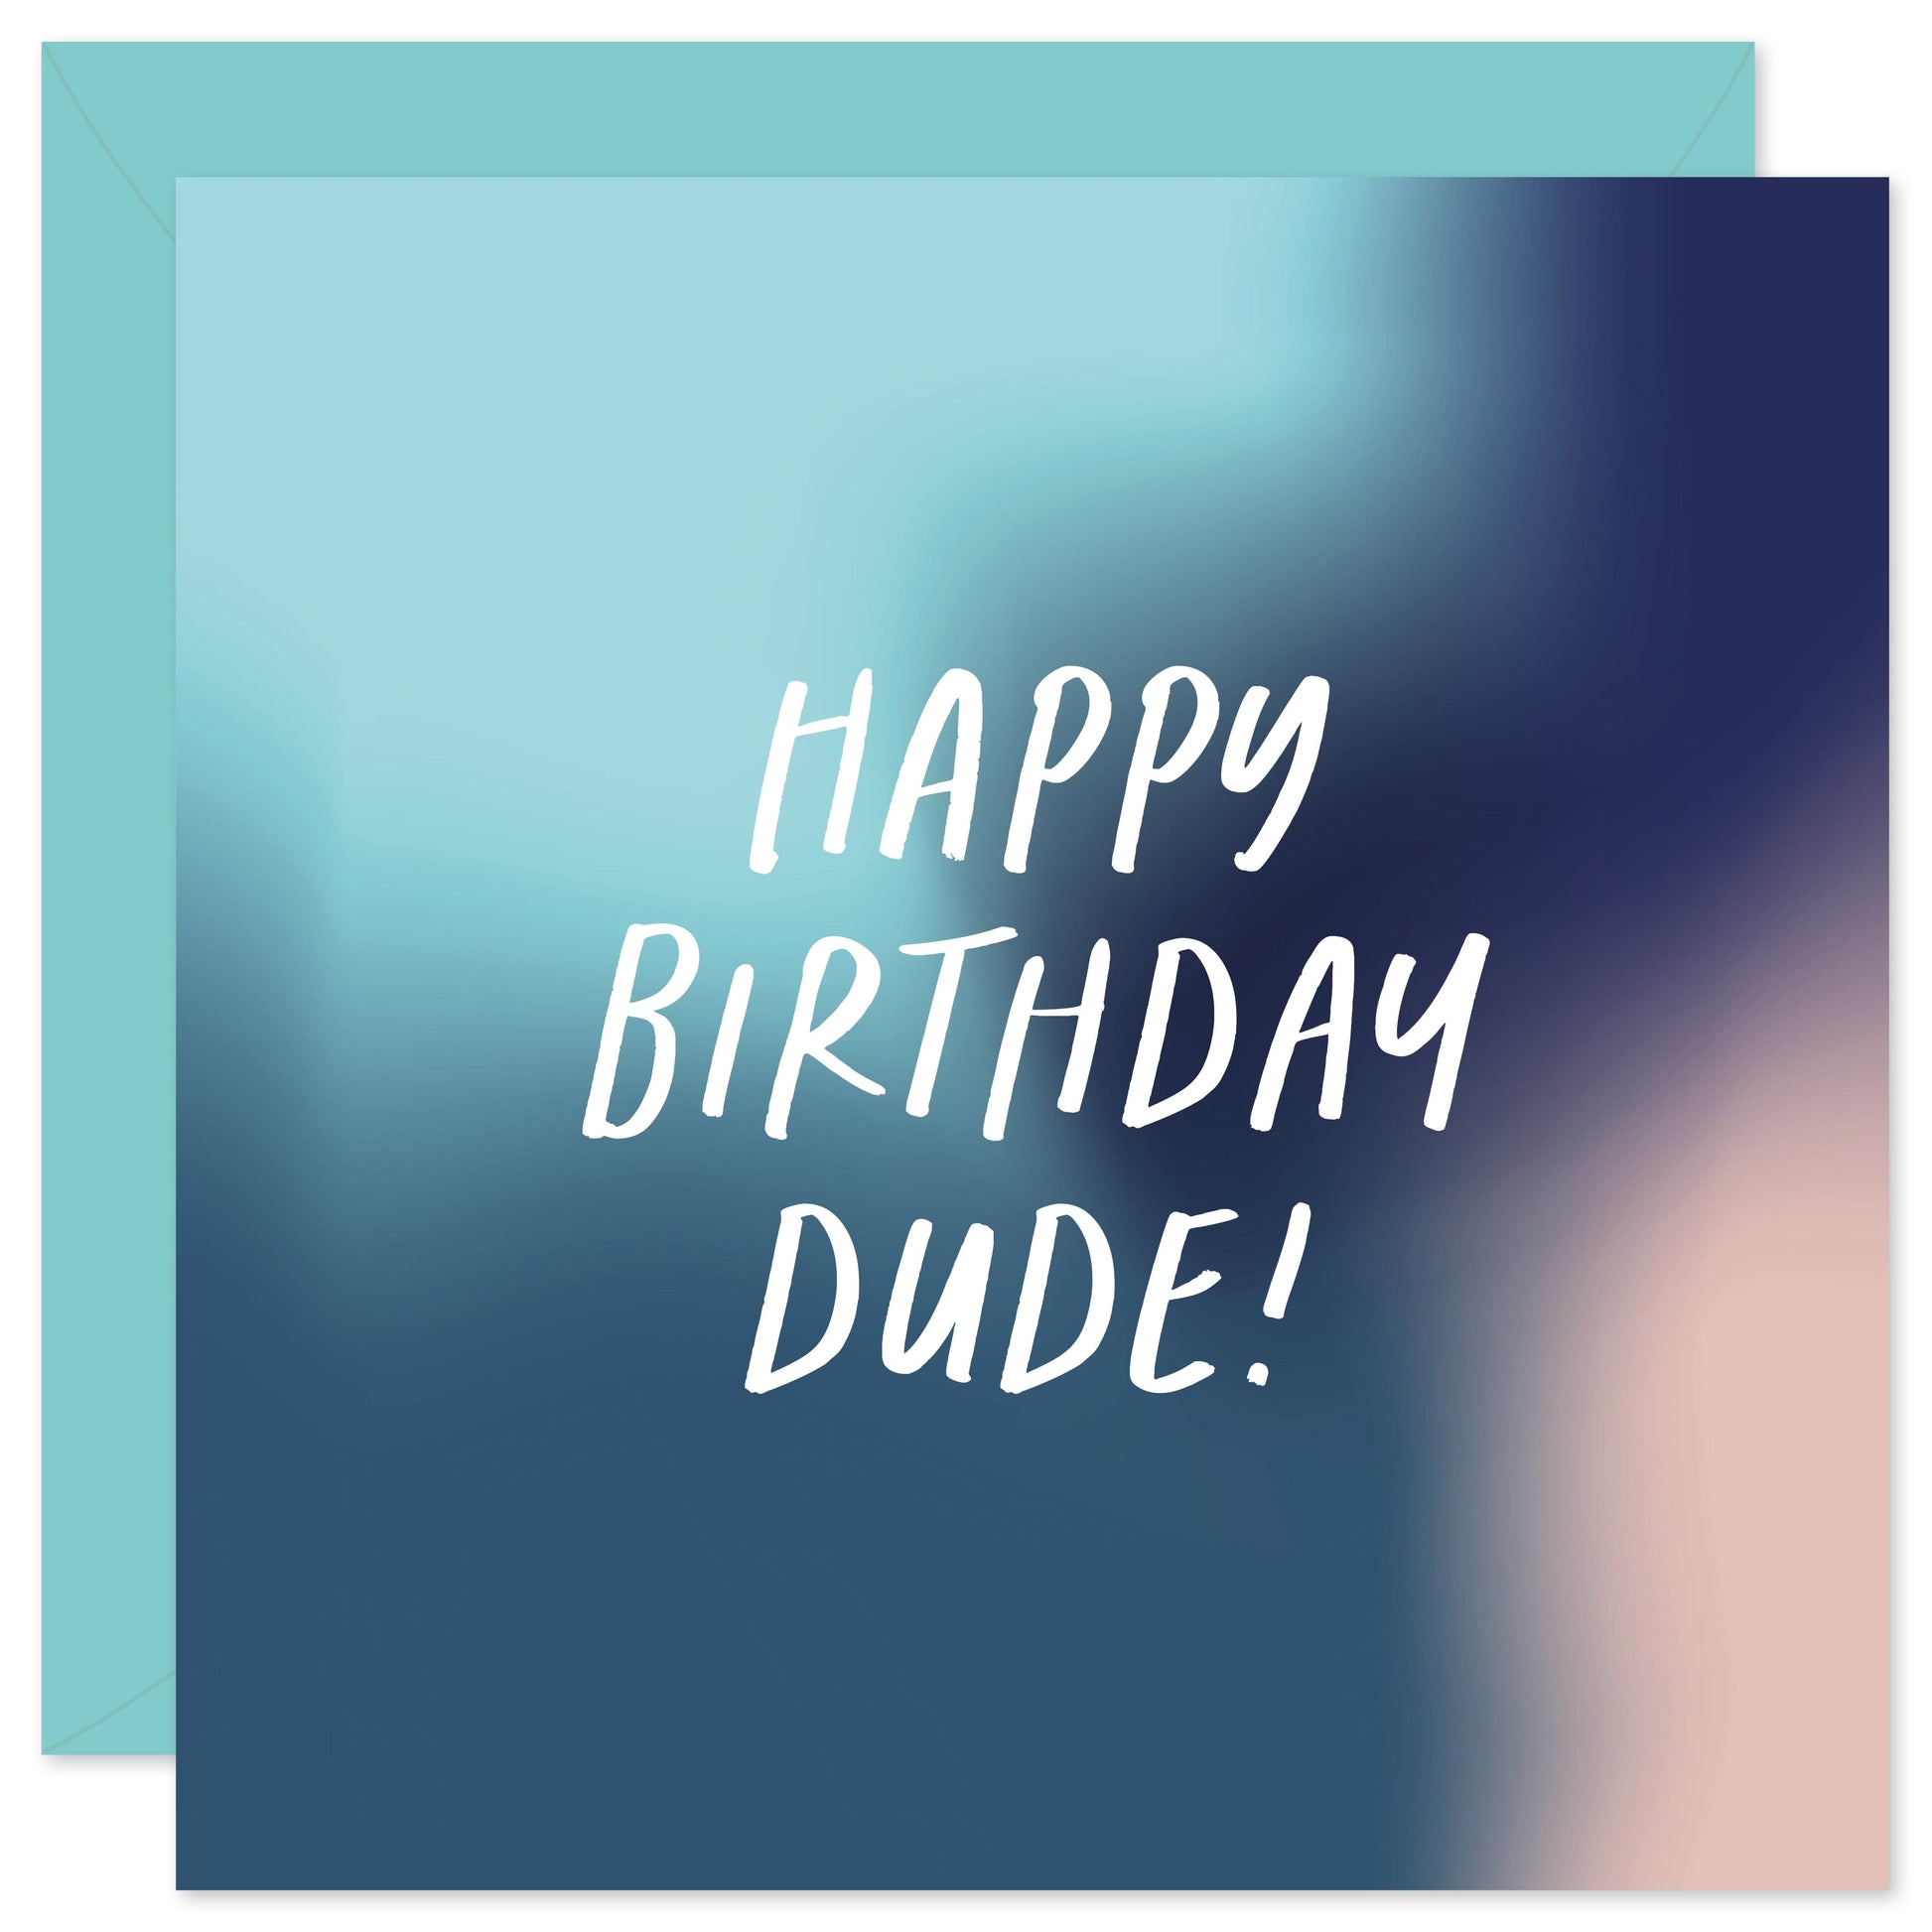 Happy birthday dude card from Purple Tree Designs